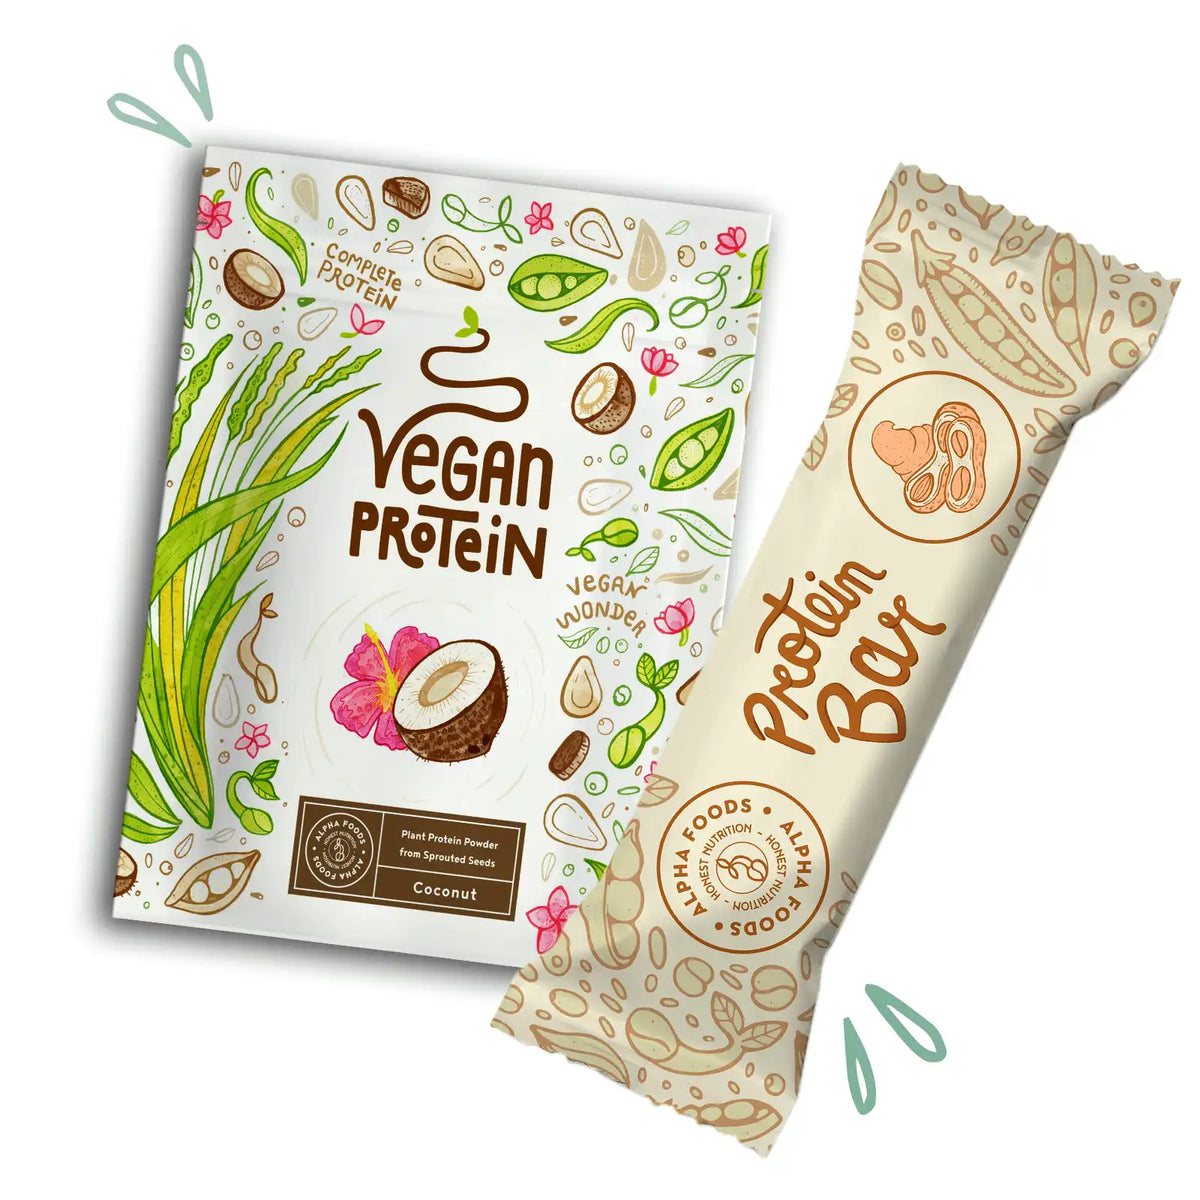 Vegan Protein Pack